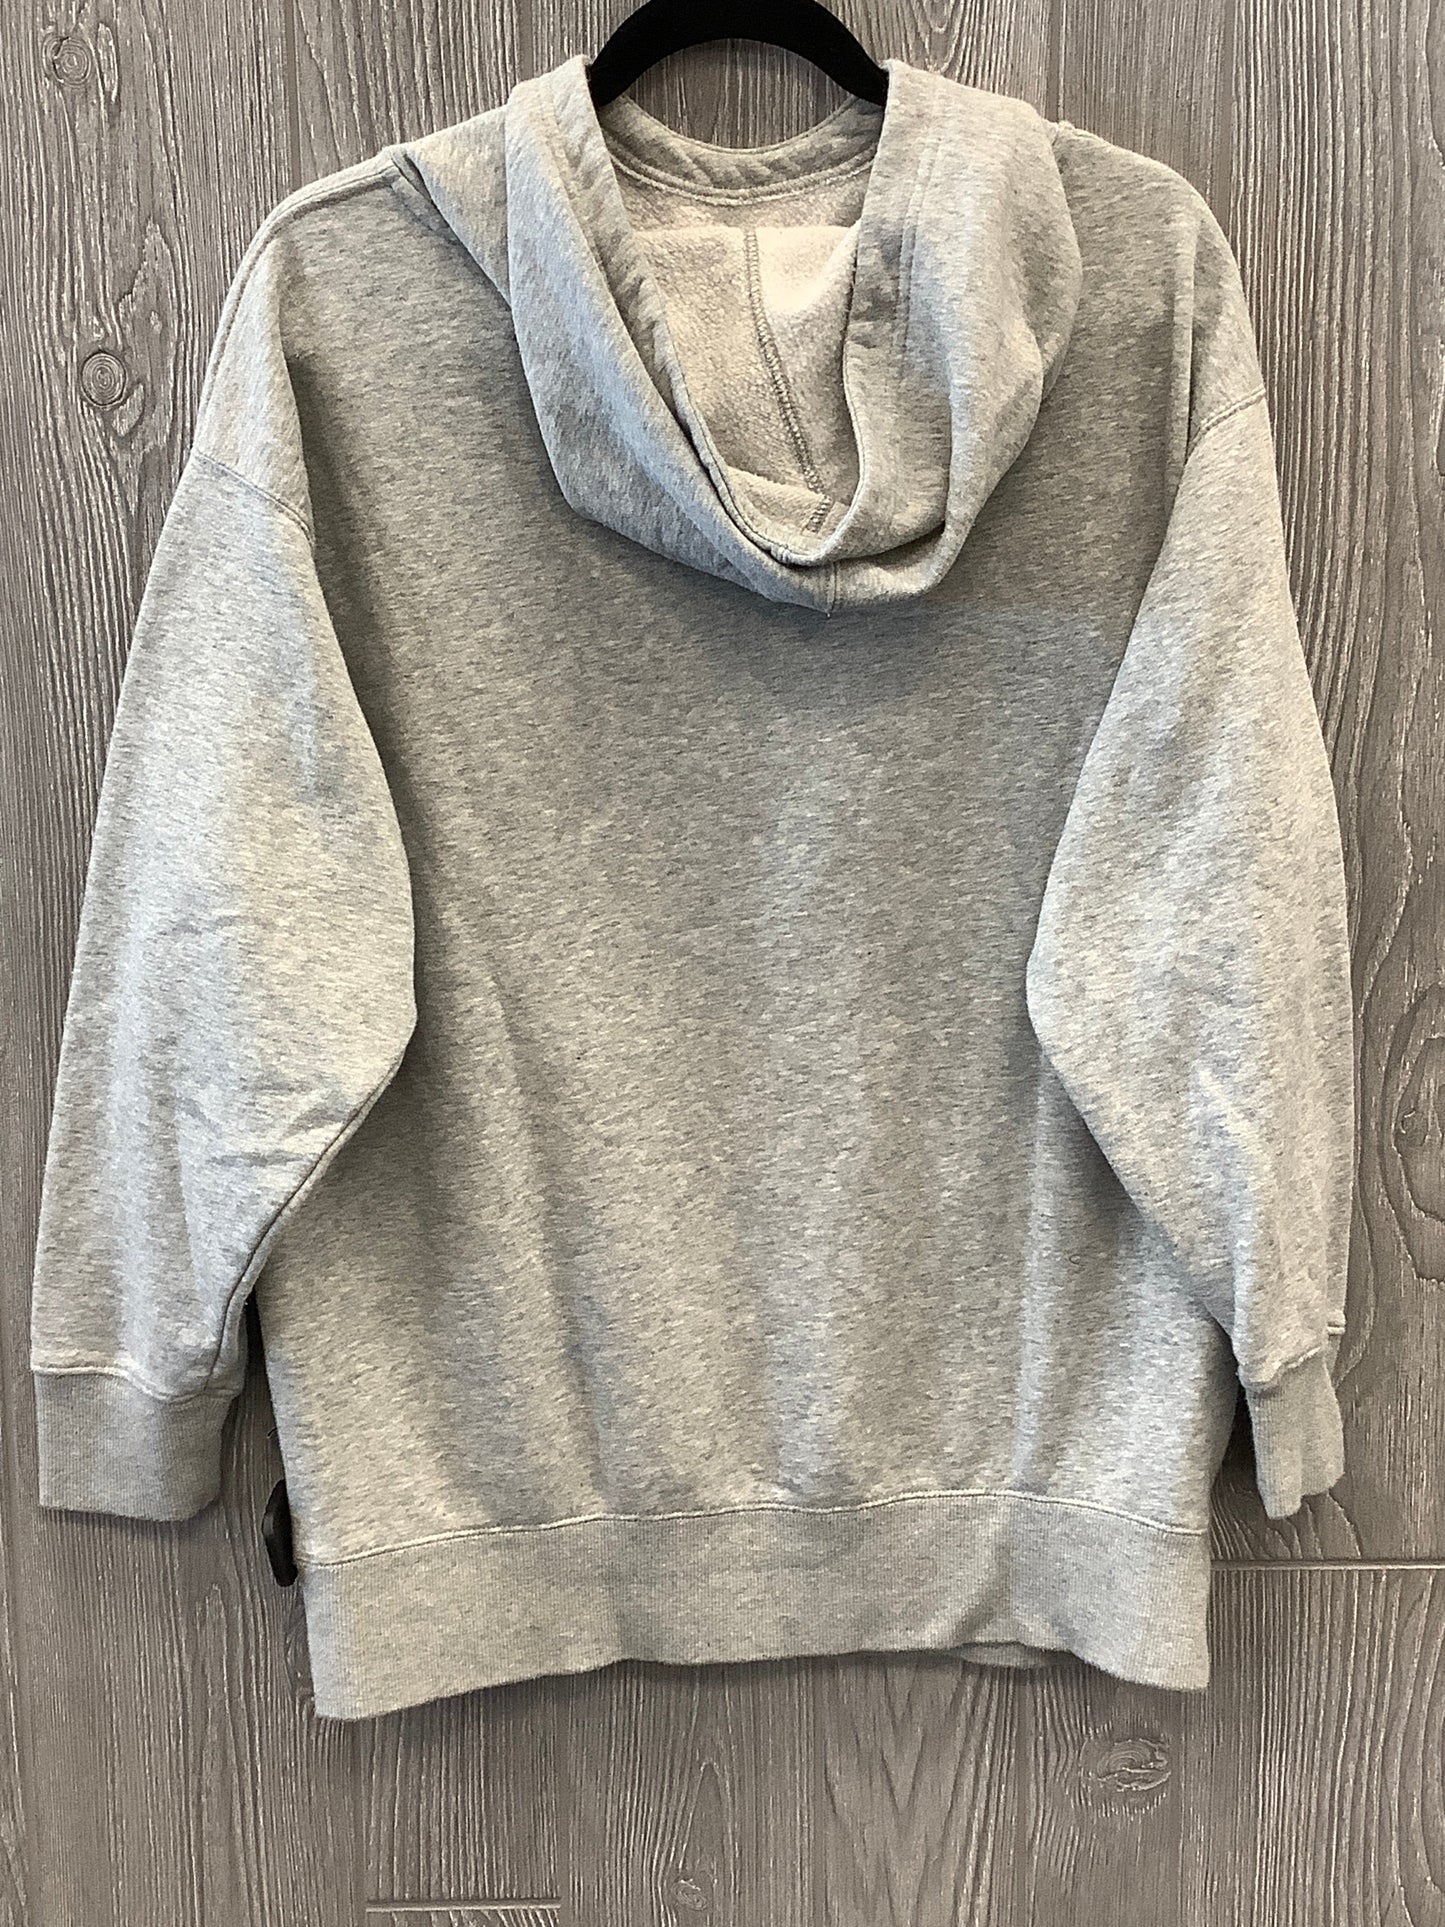 Sweatshirt Hoodie By Joy Lab  Size: S